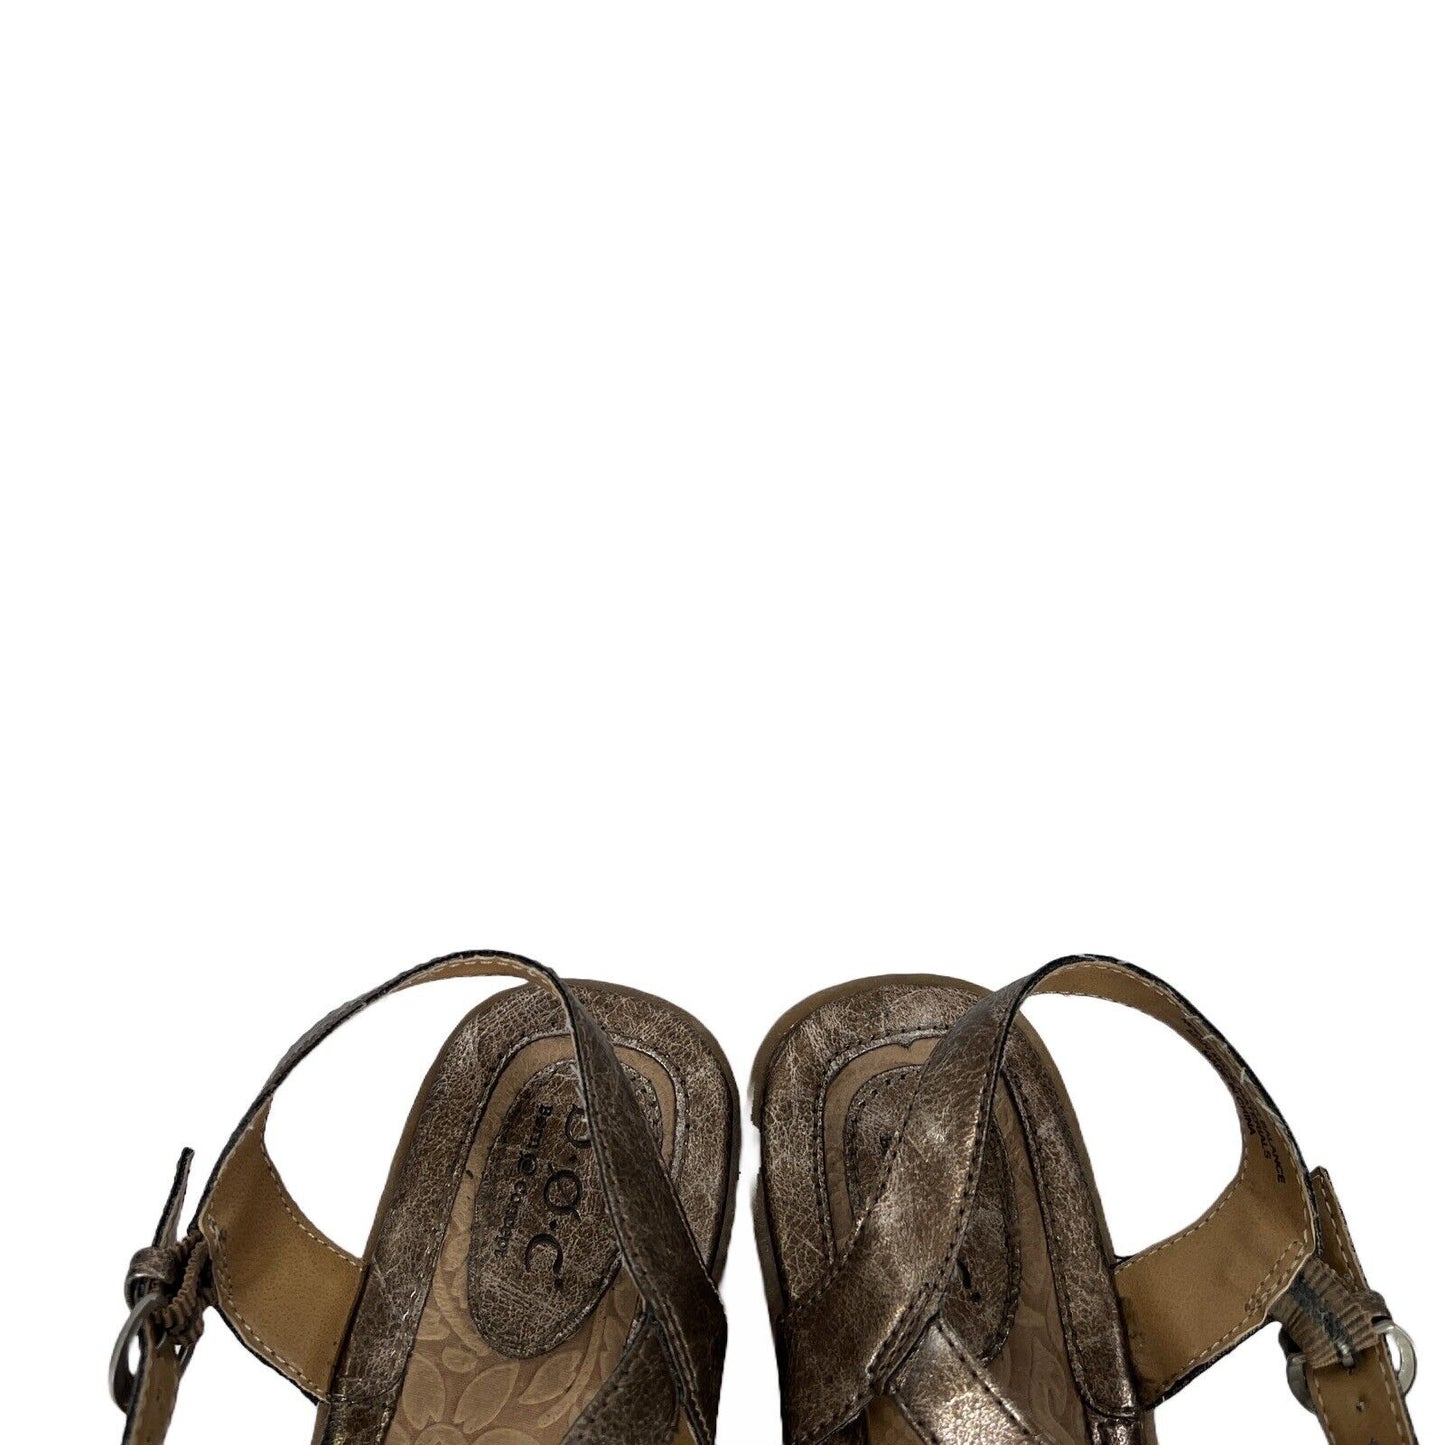 BOC Sandalias con tiras metálicas color bronce para mujer - 7